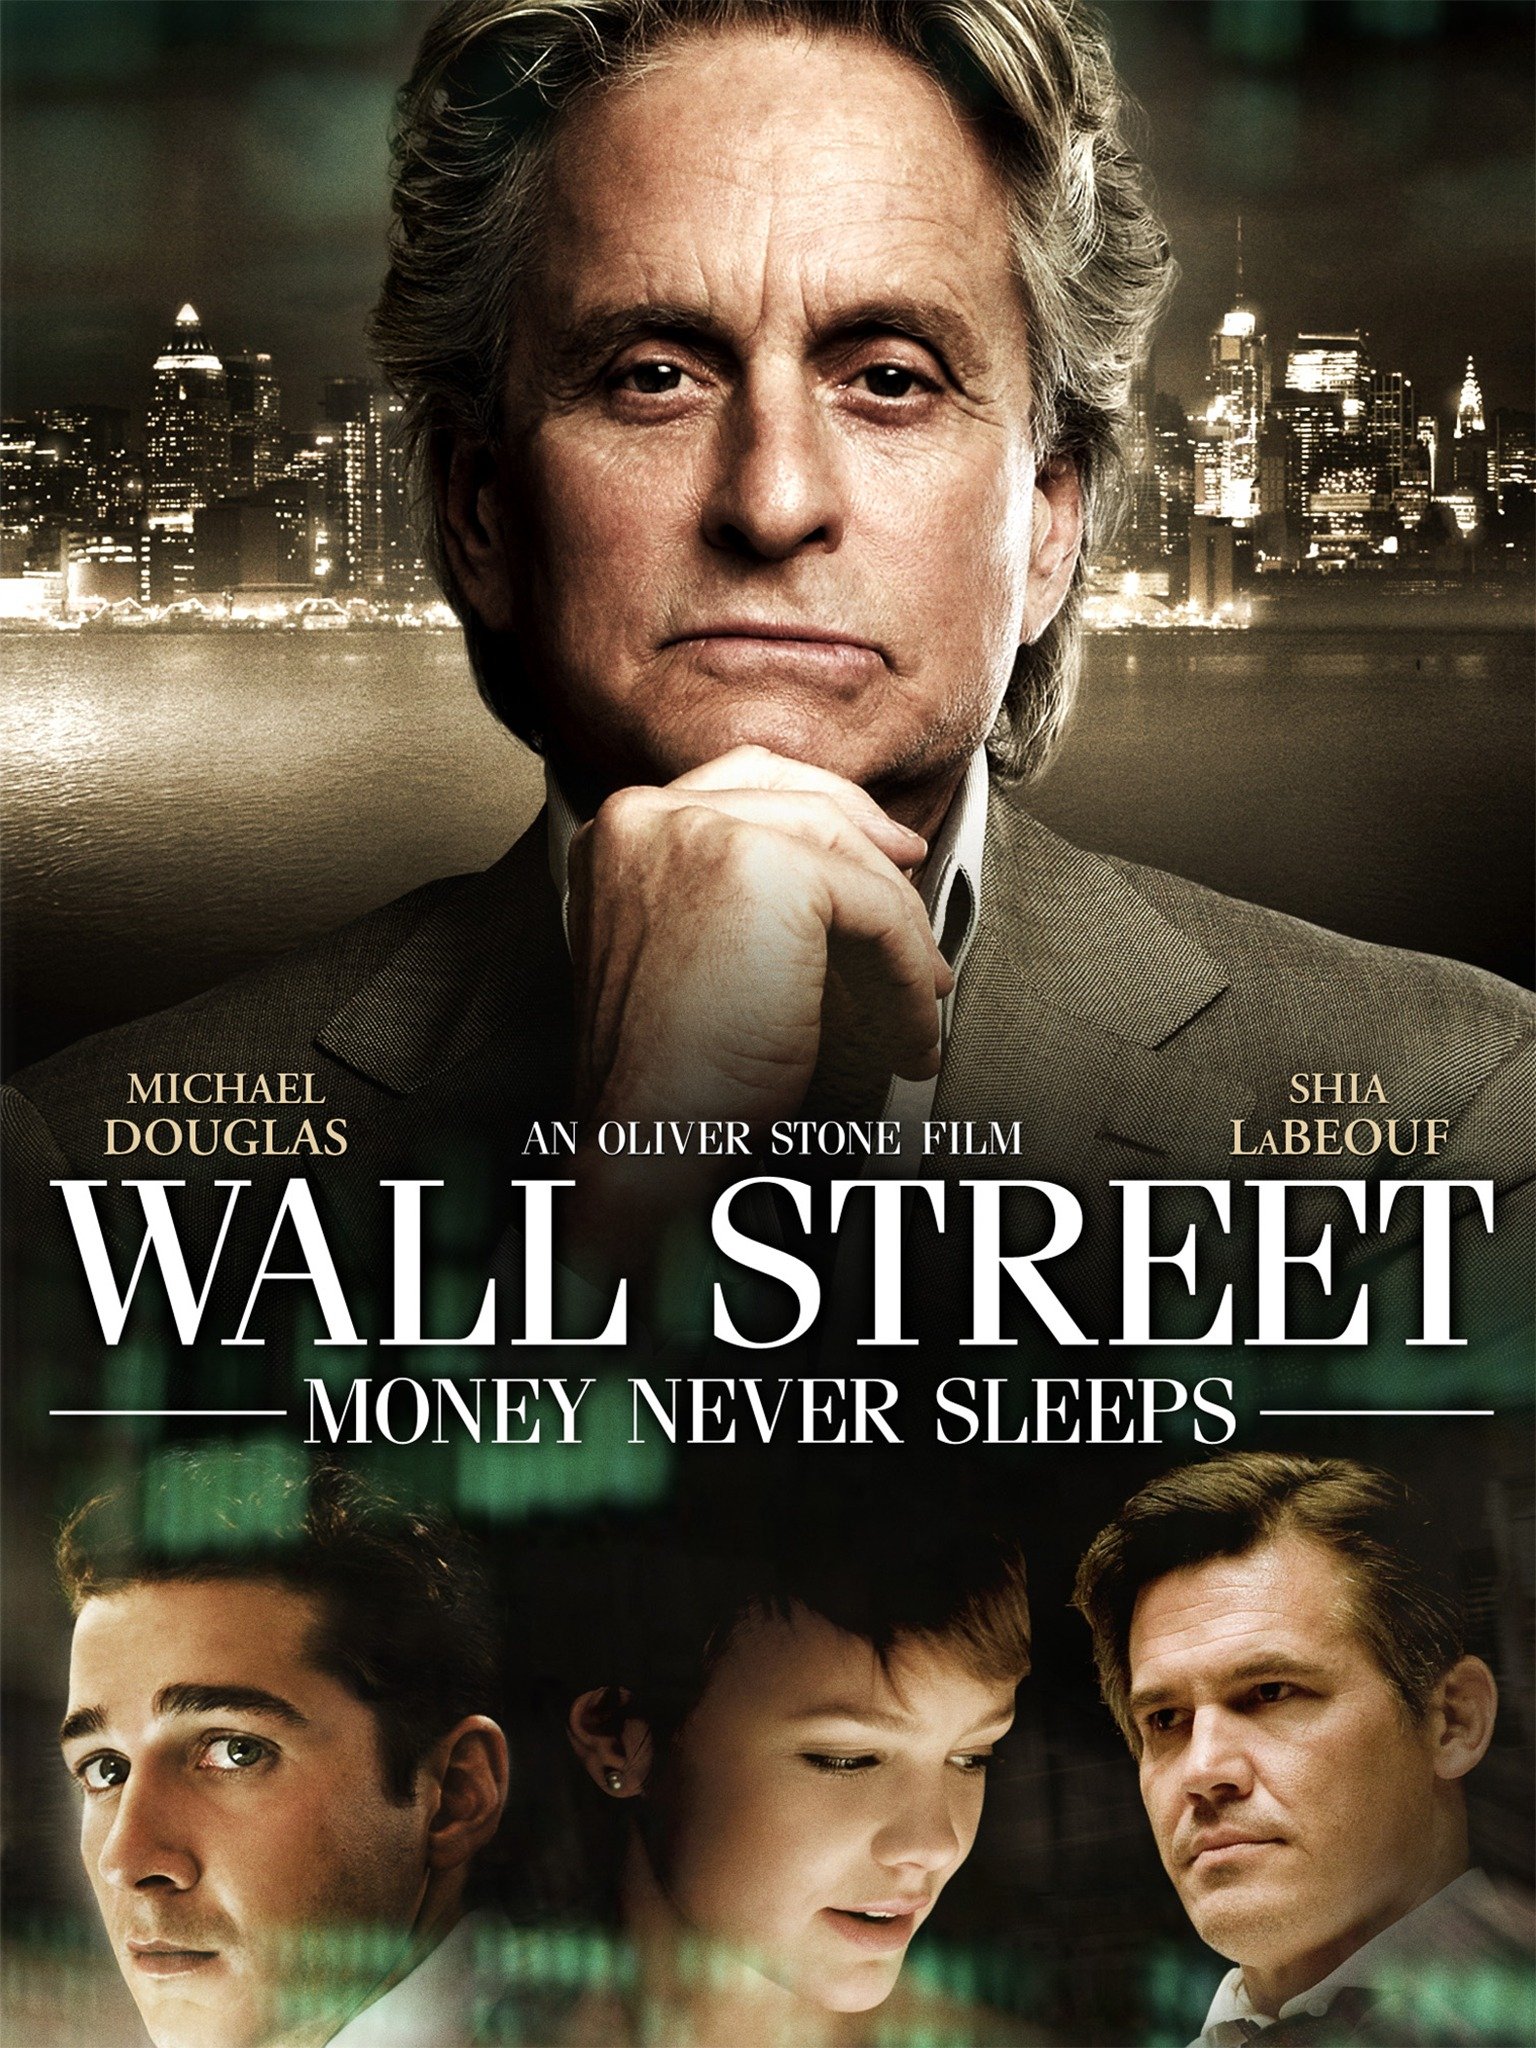 "Wall Street: Money Never Sleeps photo 20"